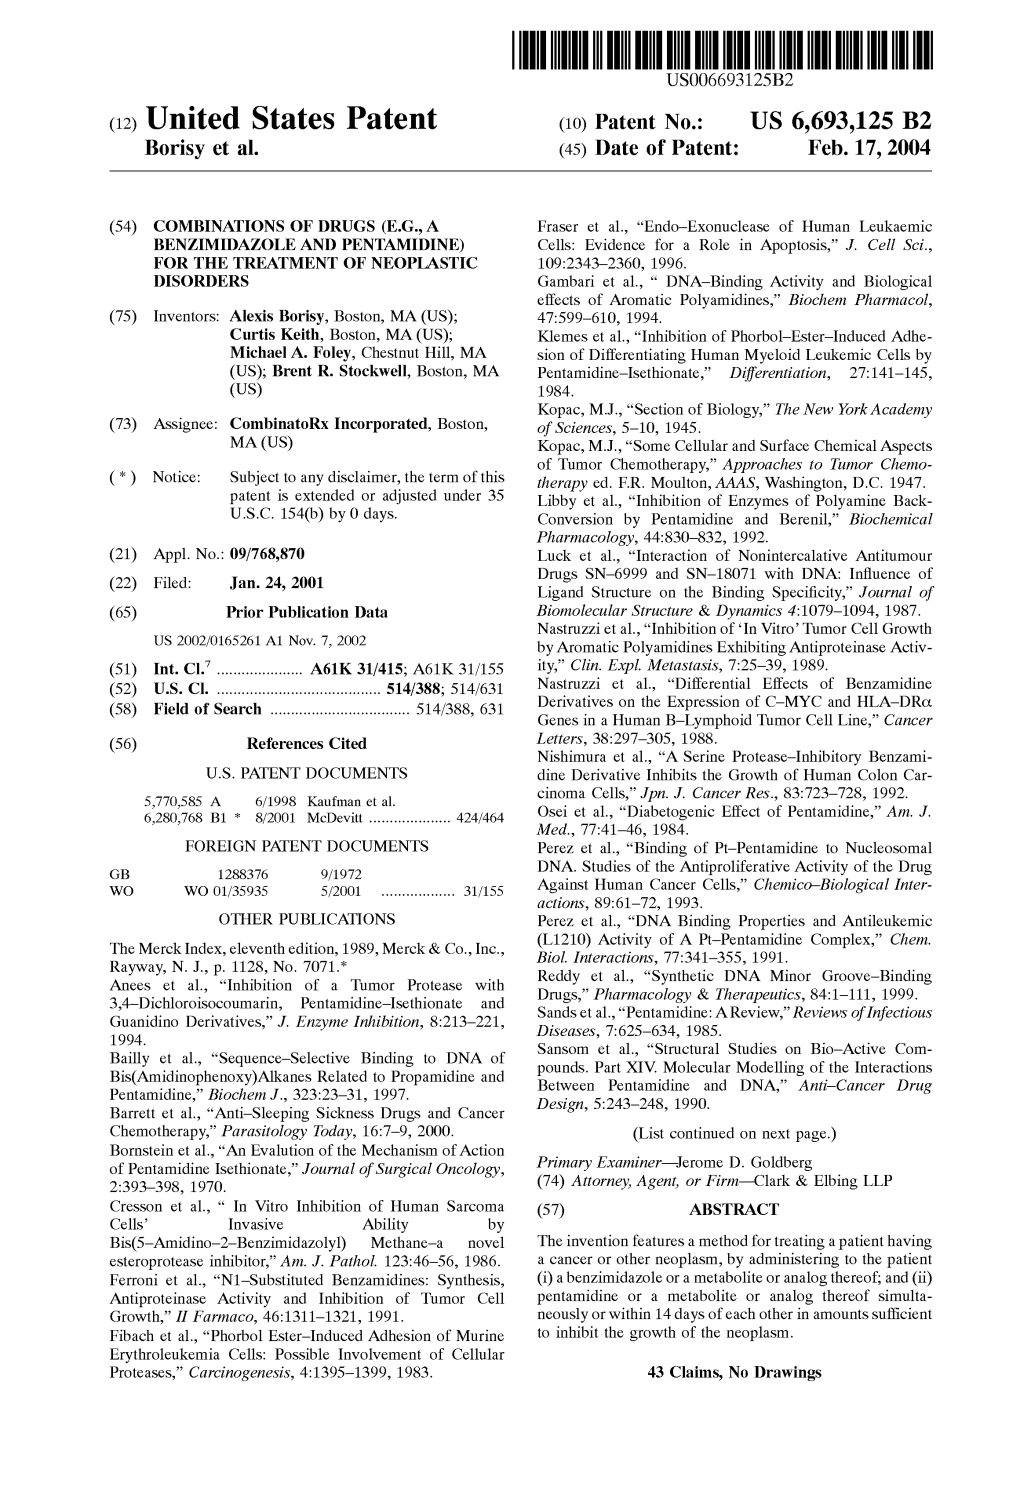 (12) United States Patent (10) Patent No.: US 6,693,125 B2 Borisy Et Al